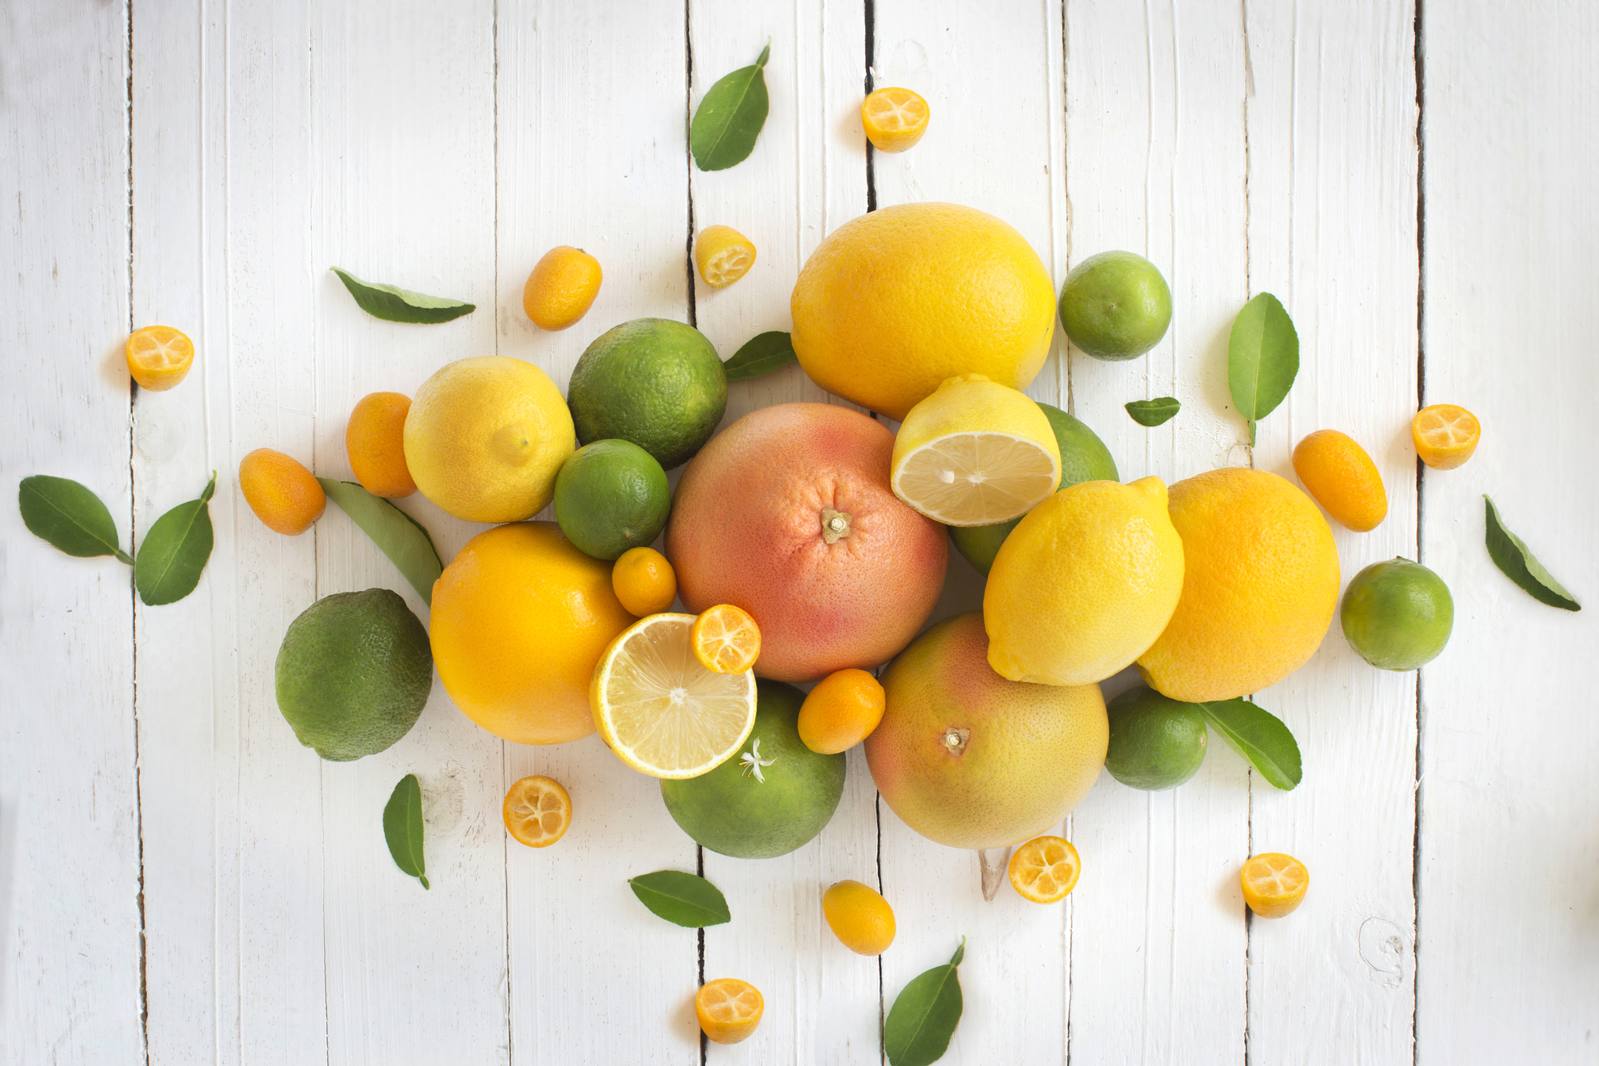 agrumi limone pompelmo clementine lime limone